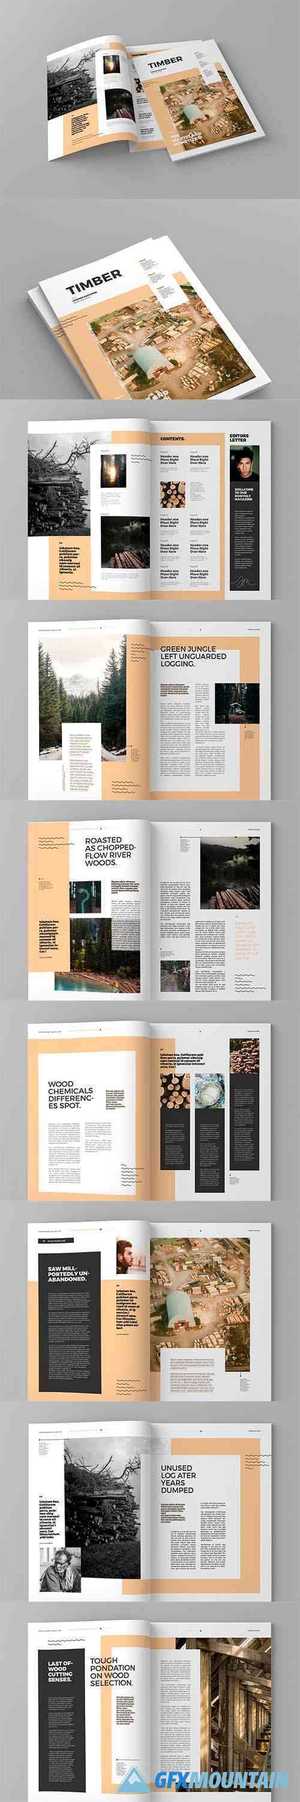 Timber - Magazine Template 4365959